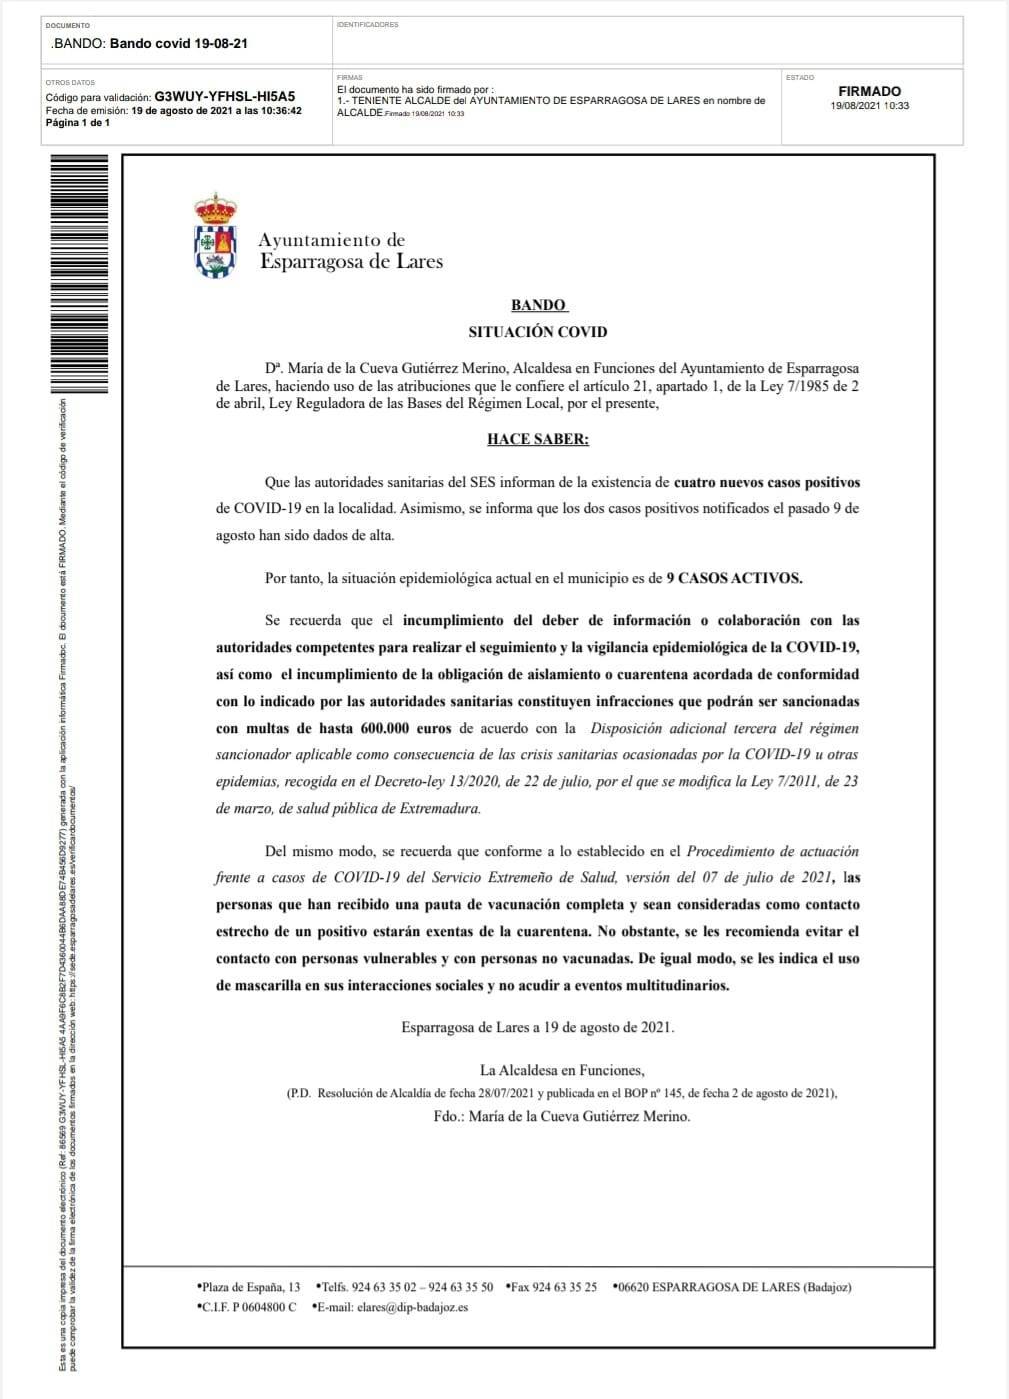 9 casos positivos activos de COVID-19 (agosto 2021) - Esparragosa de Lares (Badajoz)